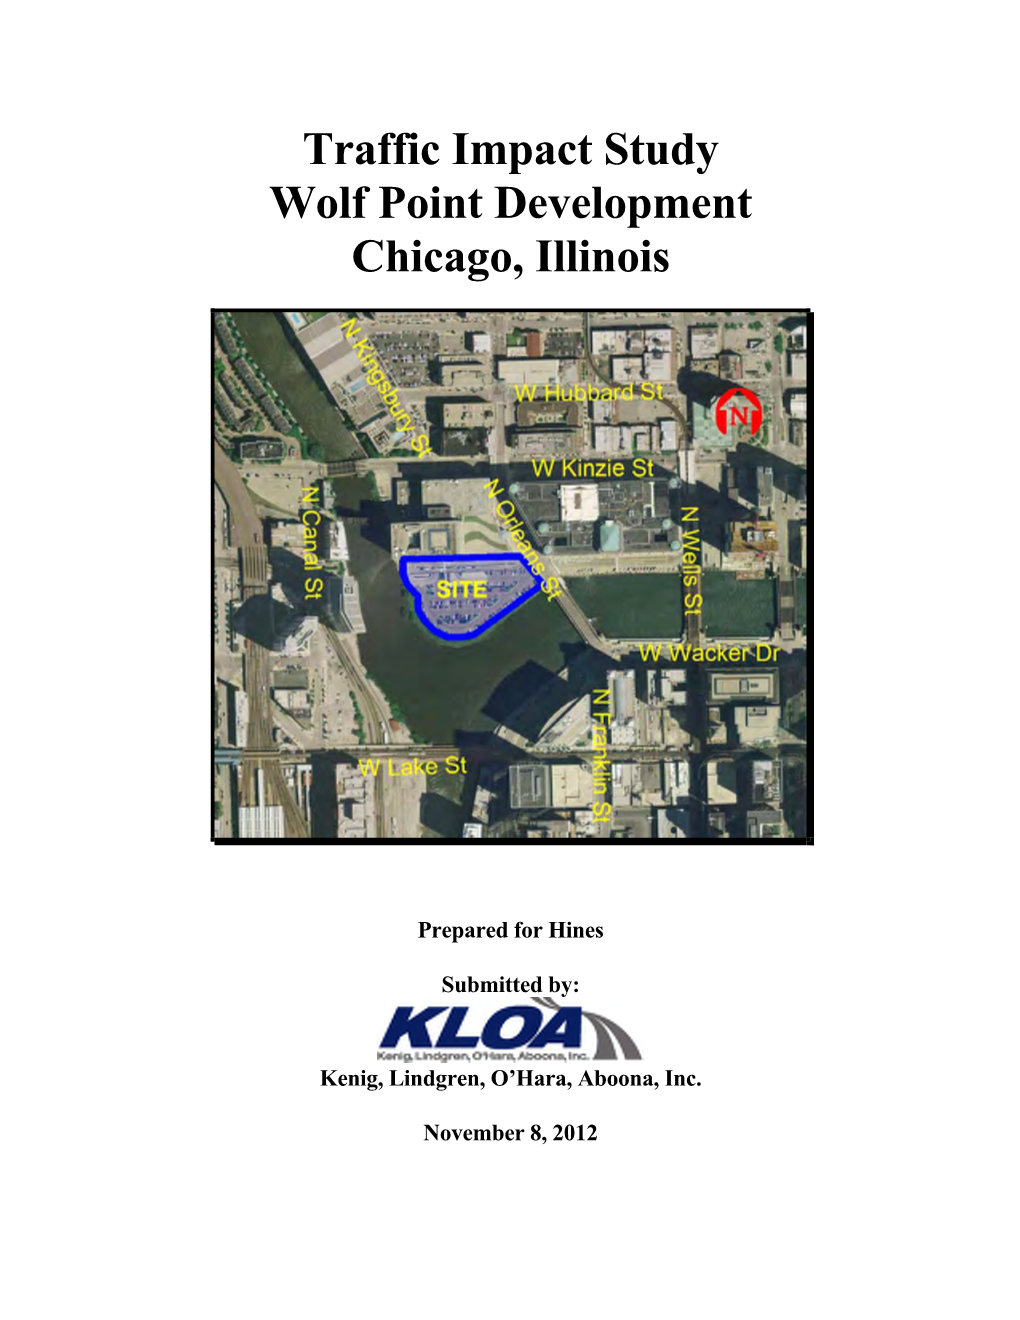 Traffic Impact Study Wolf Point Development Chicago, Illinois